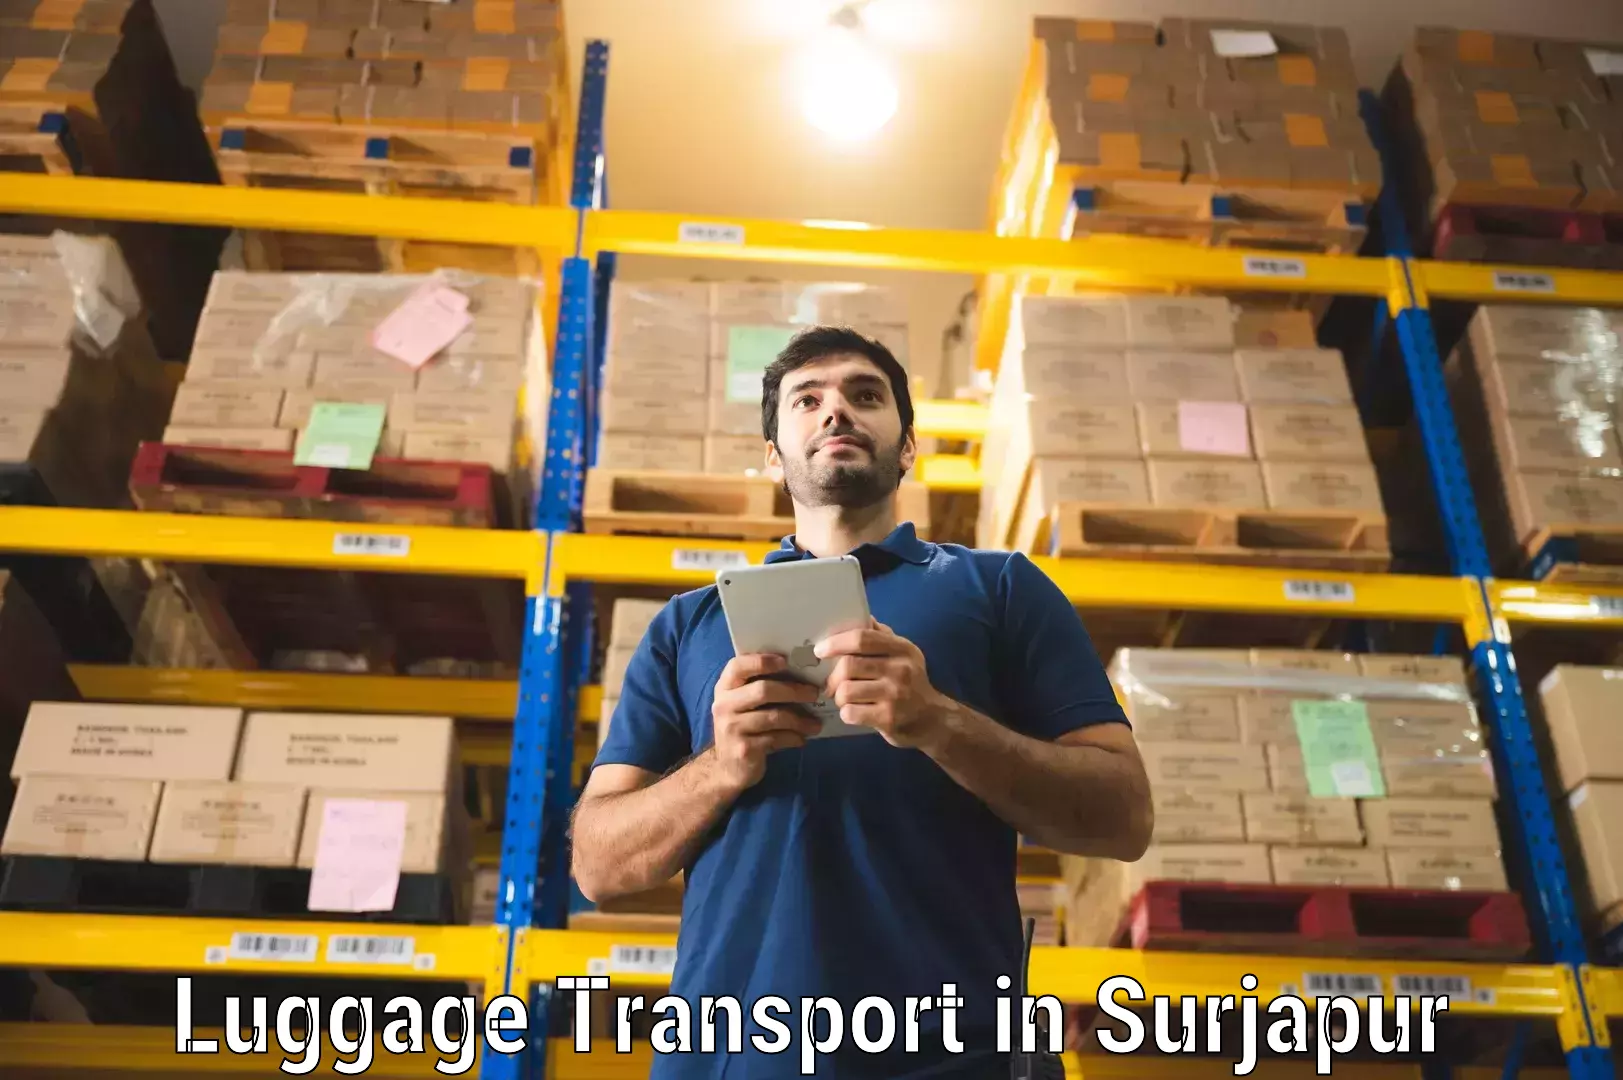 Baggage transport innovation in Surjapur